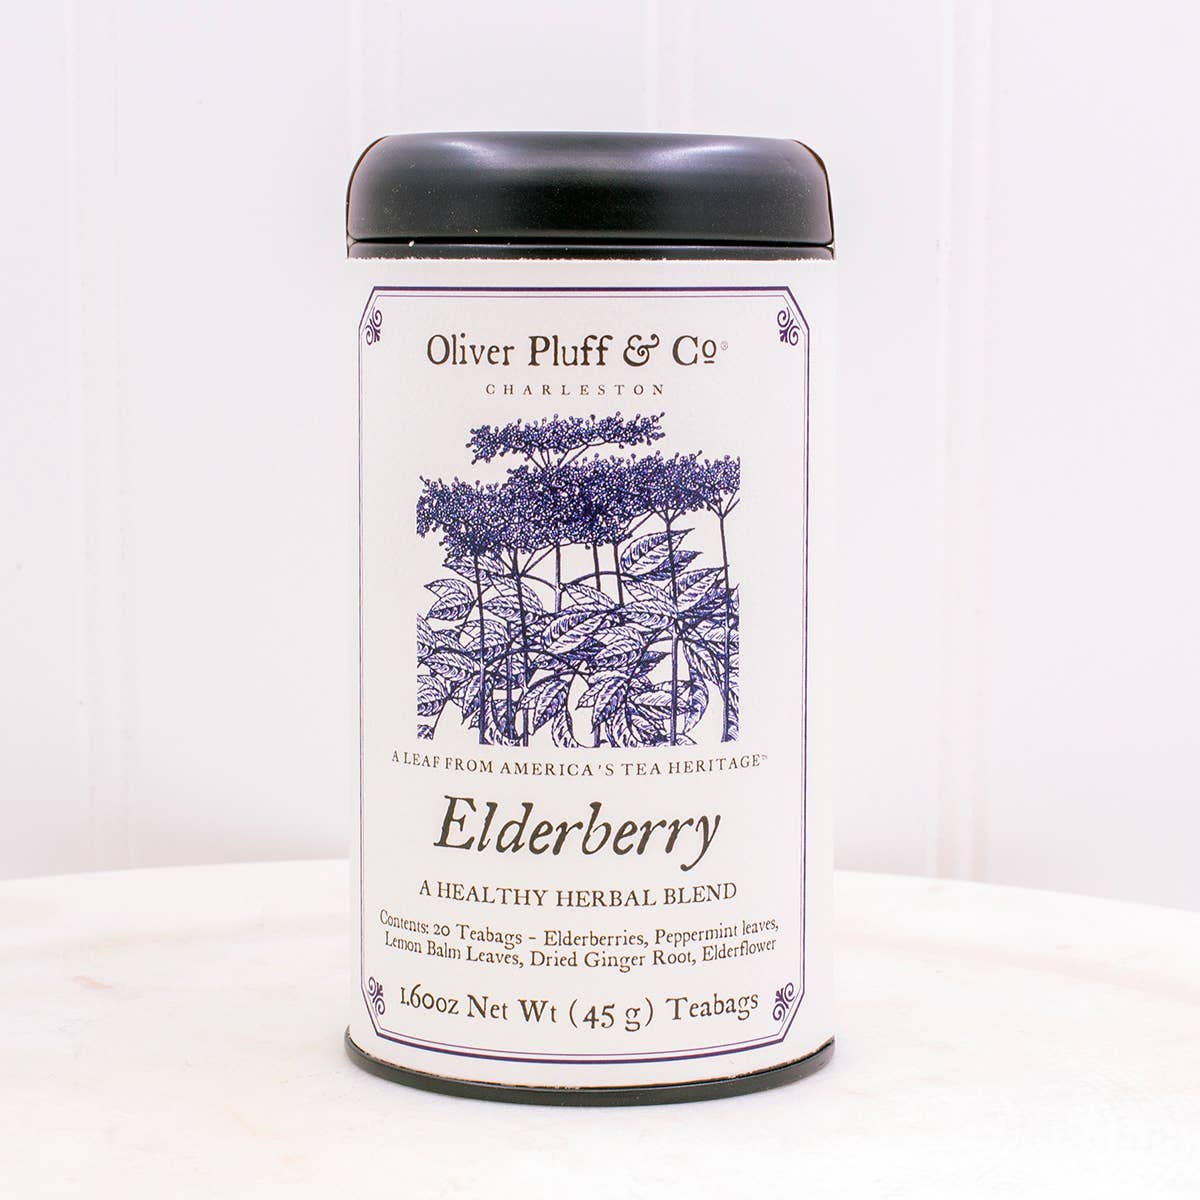 Oliver Pluff & Company - Elderberry - 20 Teabags in Signature Tea Tin